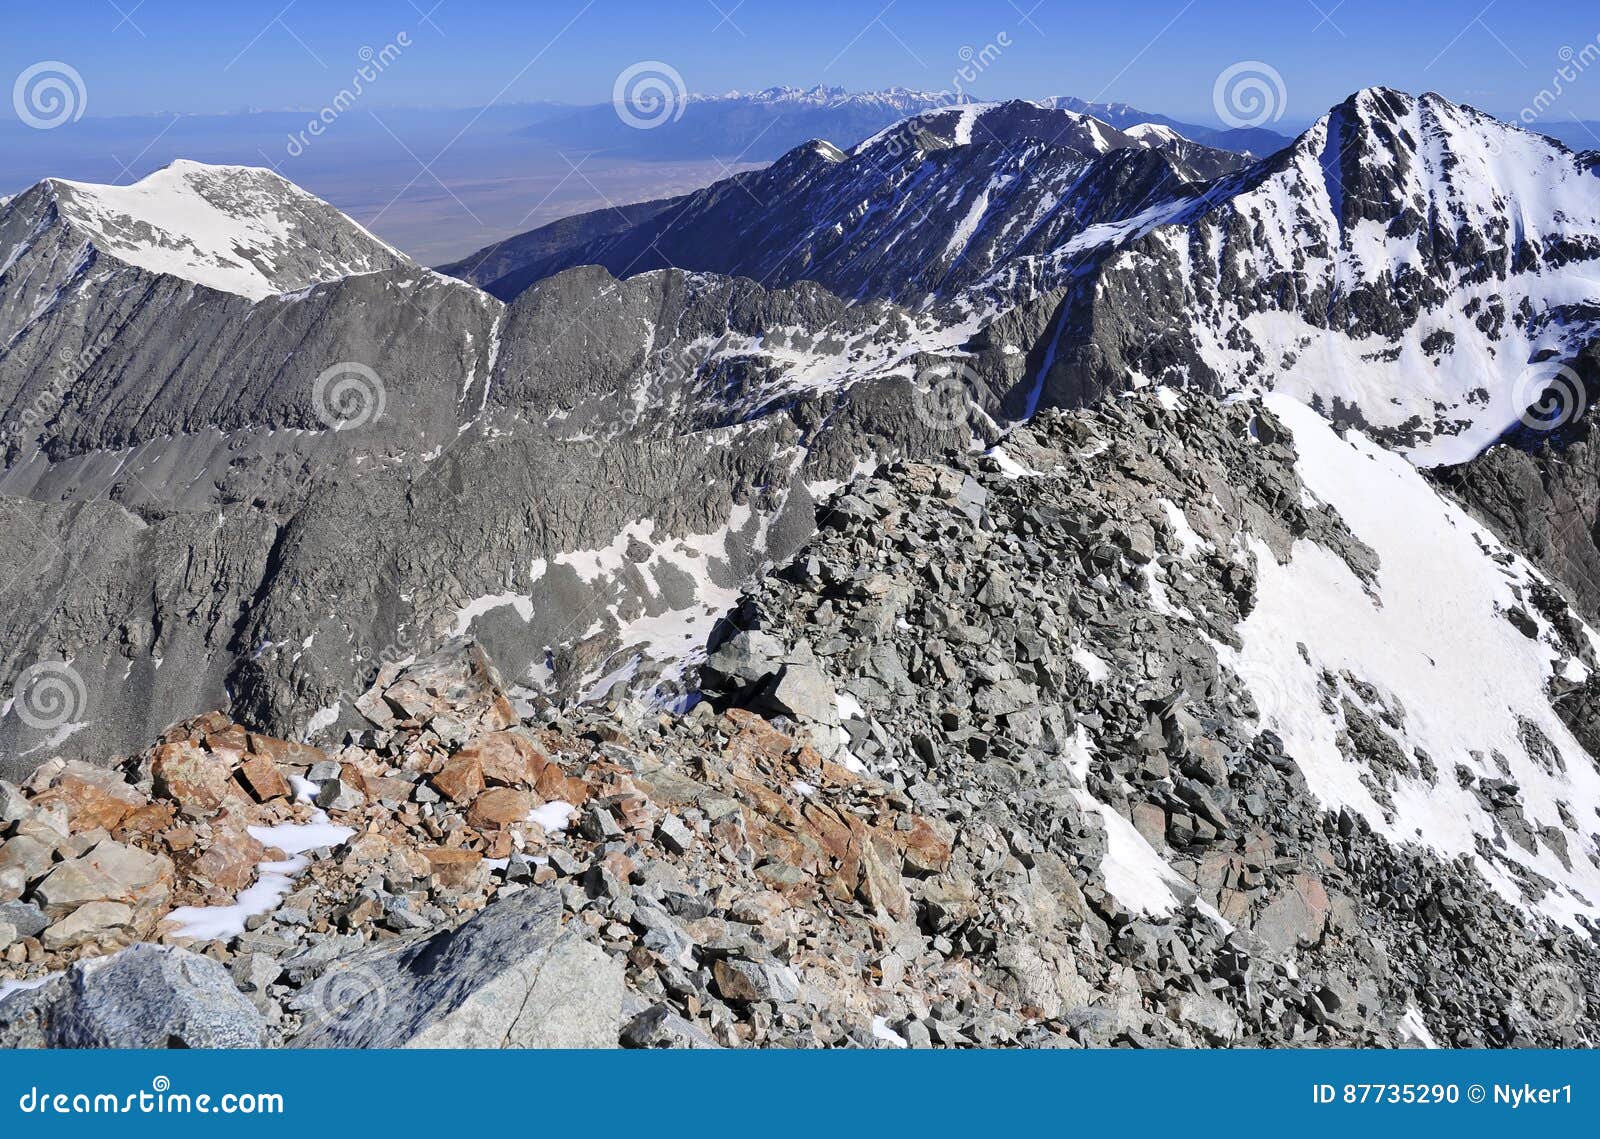 snow covered alpine landscape on colorado 14er little bear peak